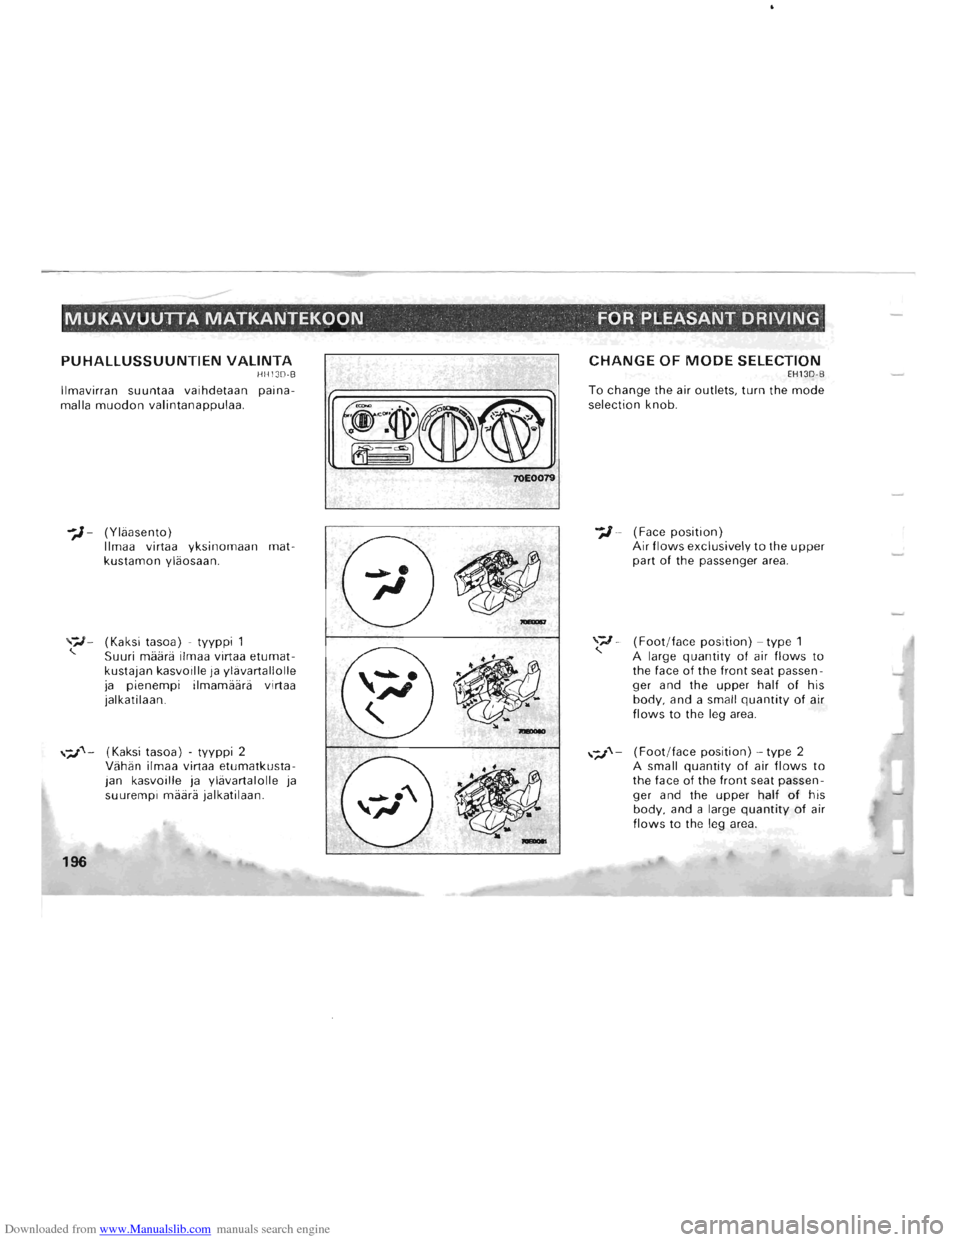 MITSUBISHI PAJERO 1996 2.G Owners Guide Downloaded from www.Manualslib.com manuals search engine MUKAVUUTTA MATKANTEKOON FOR PLEASANT DRIVING 
PUHALLUSSUUNTIEN VALINTA HH13D·B 
Ilmavirran  suuntaa vaihdetaan  paina­
malla muodon valintana